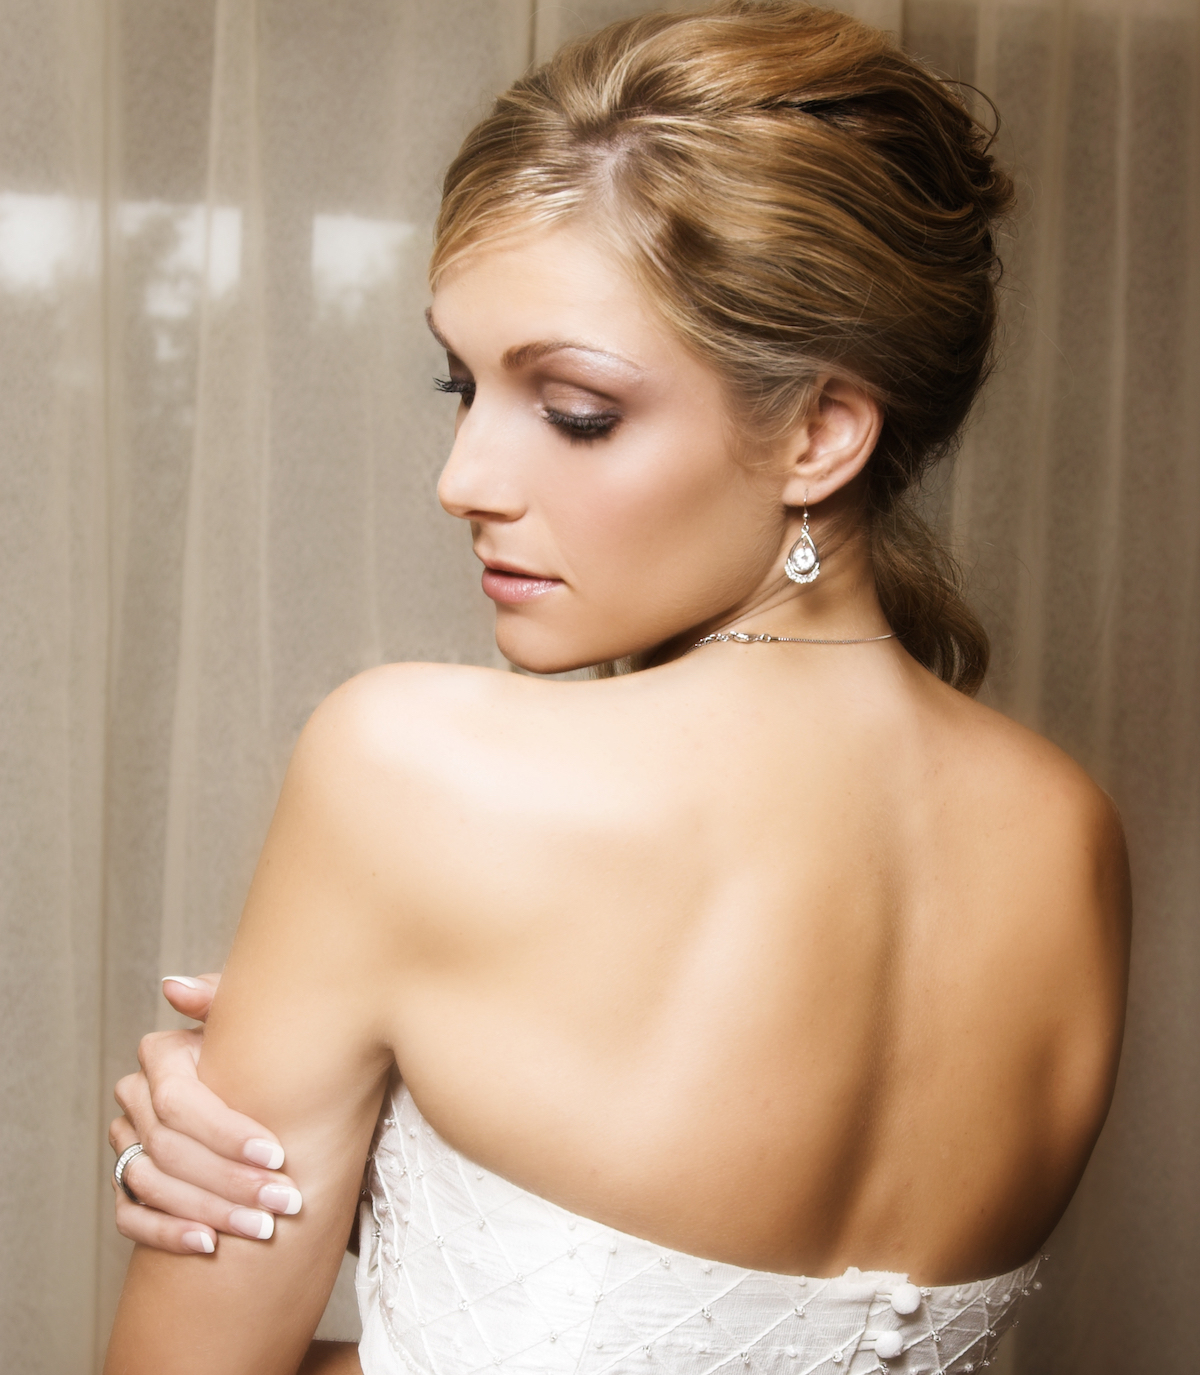 Beautiful Blond bride wearing diamond jewelery looking over her shoulder via Shutterstock